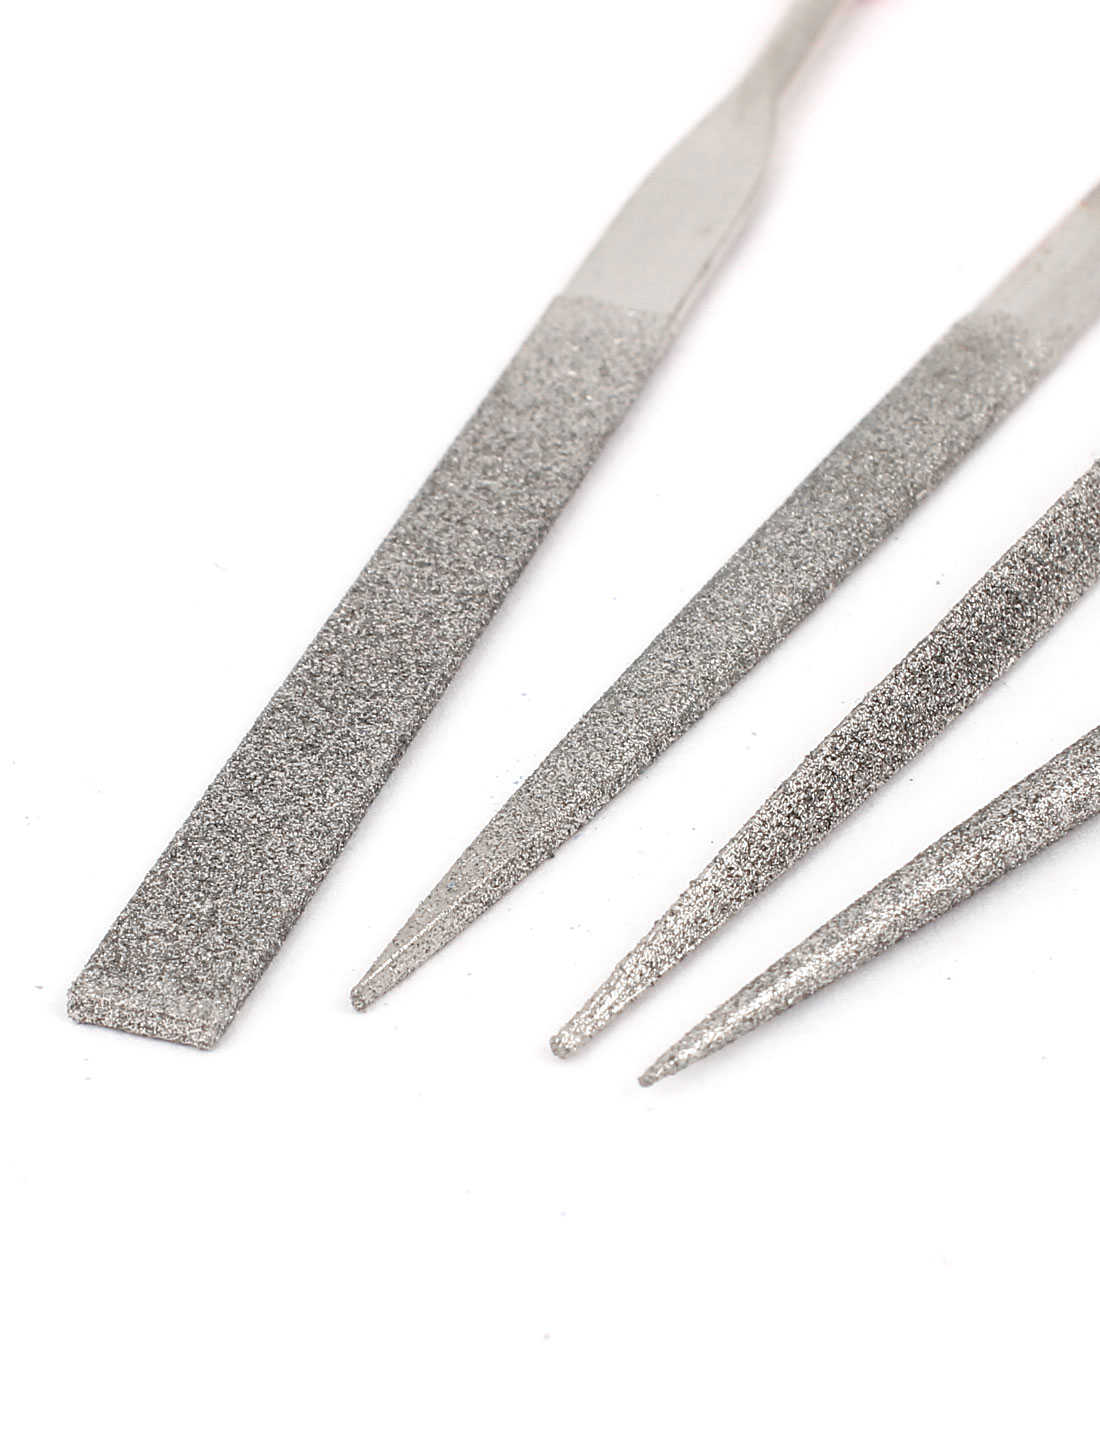 3mm x 140mm Rubber Handle Diamond Coated Needle Files Tool 4 Pcs